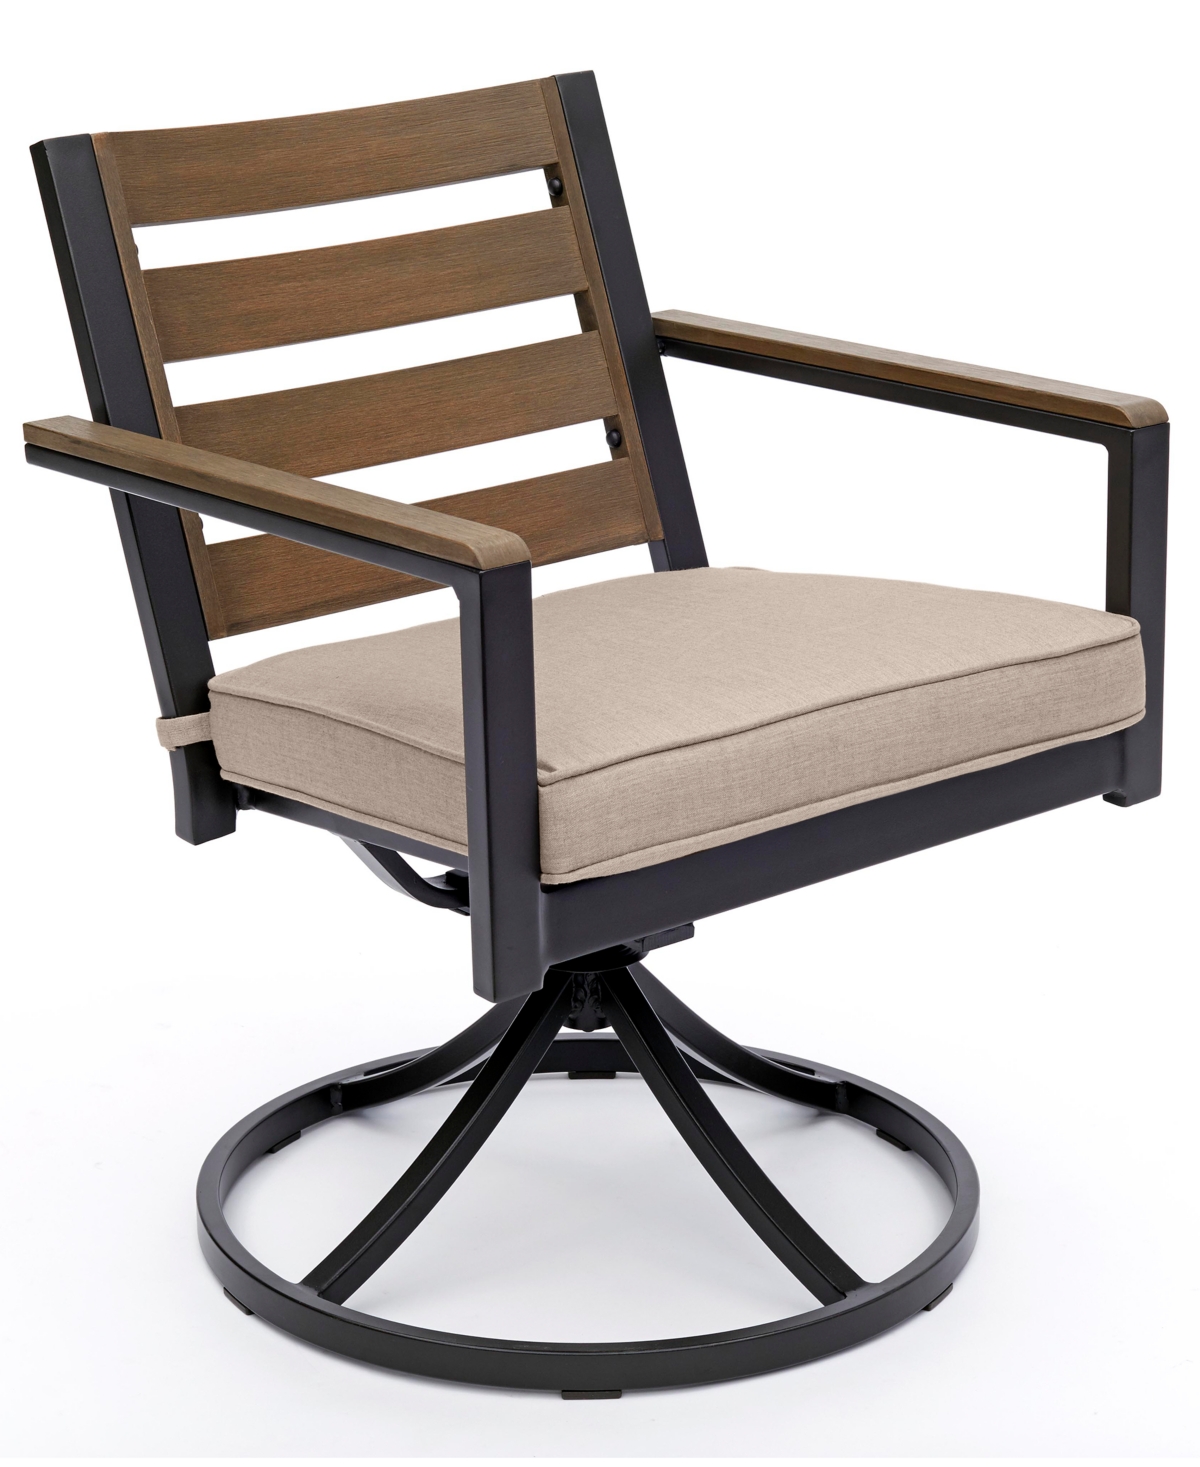 Stockholm Outdoor Swivel Rocker Chair, Created for Macys